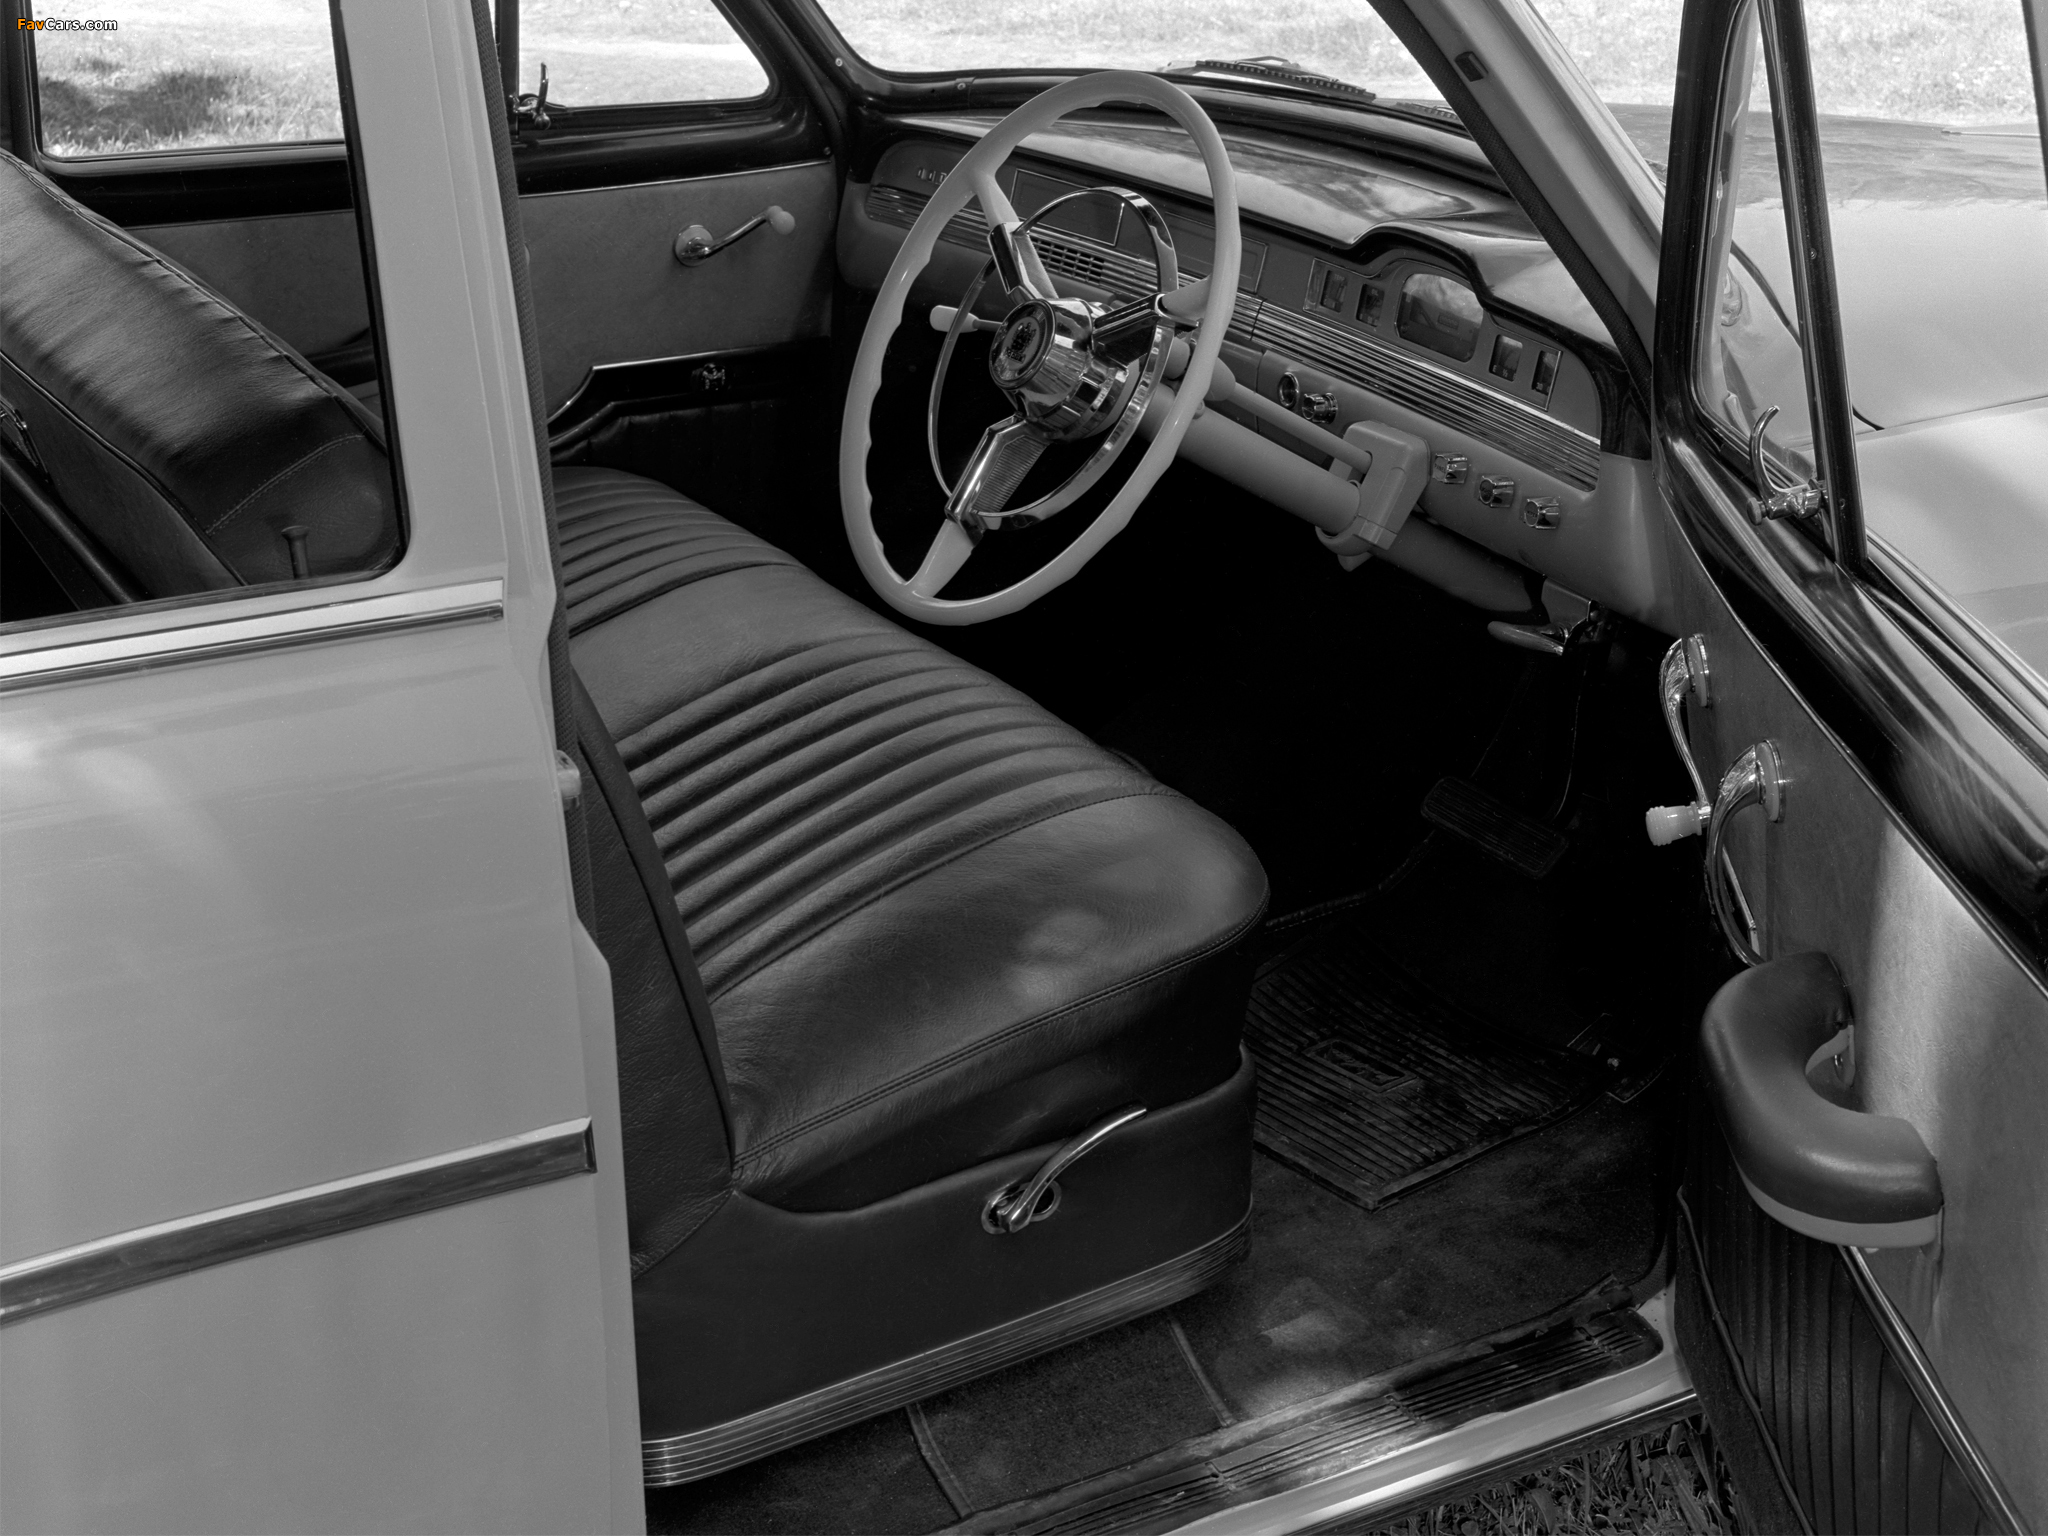 Images of Dodge Kingsway Coronet 1956 (2048 x 1536)